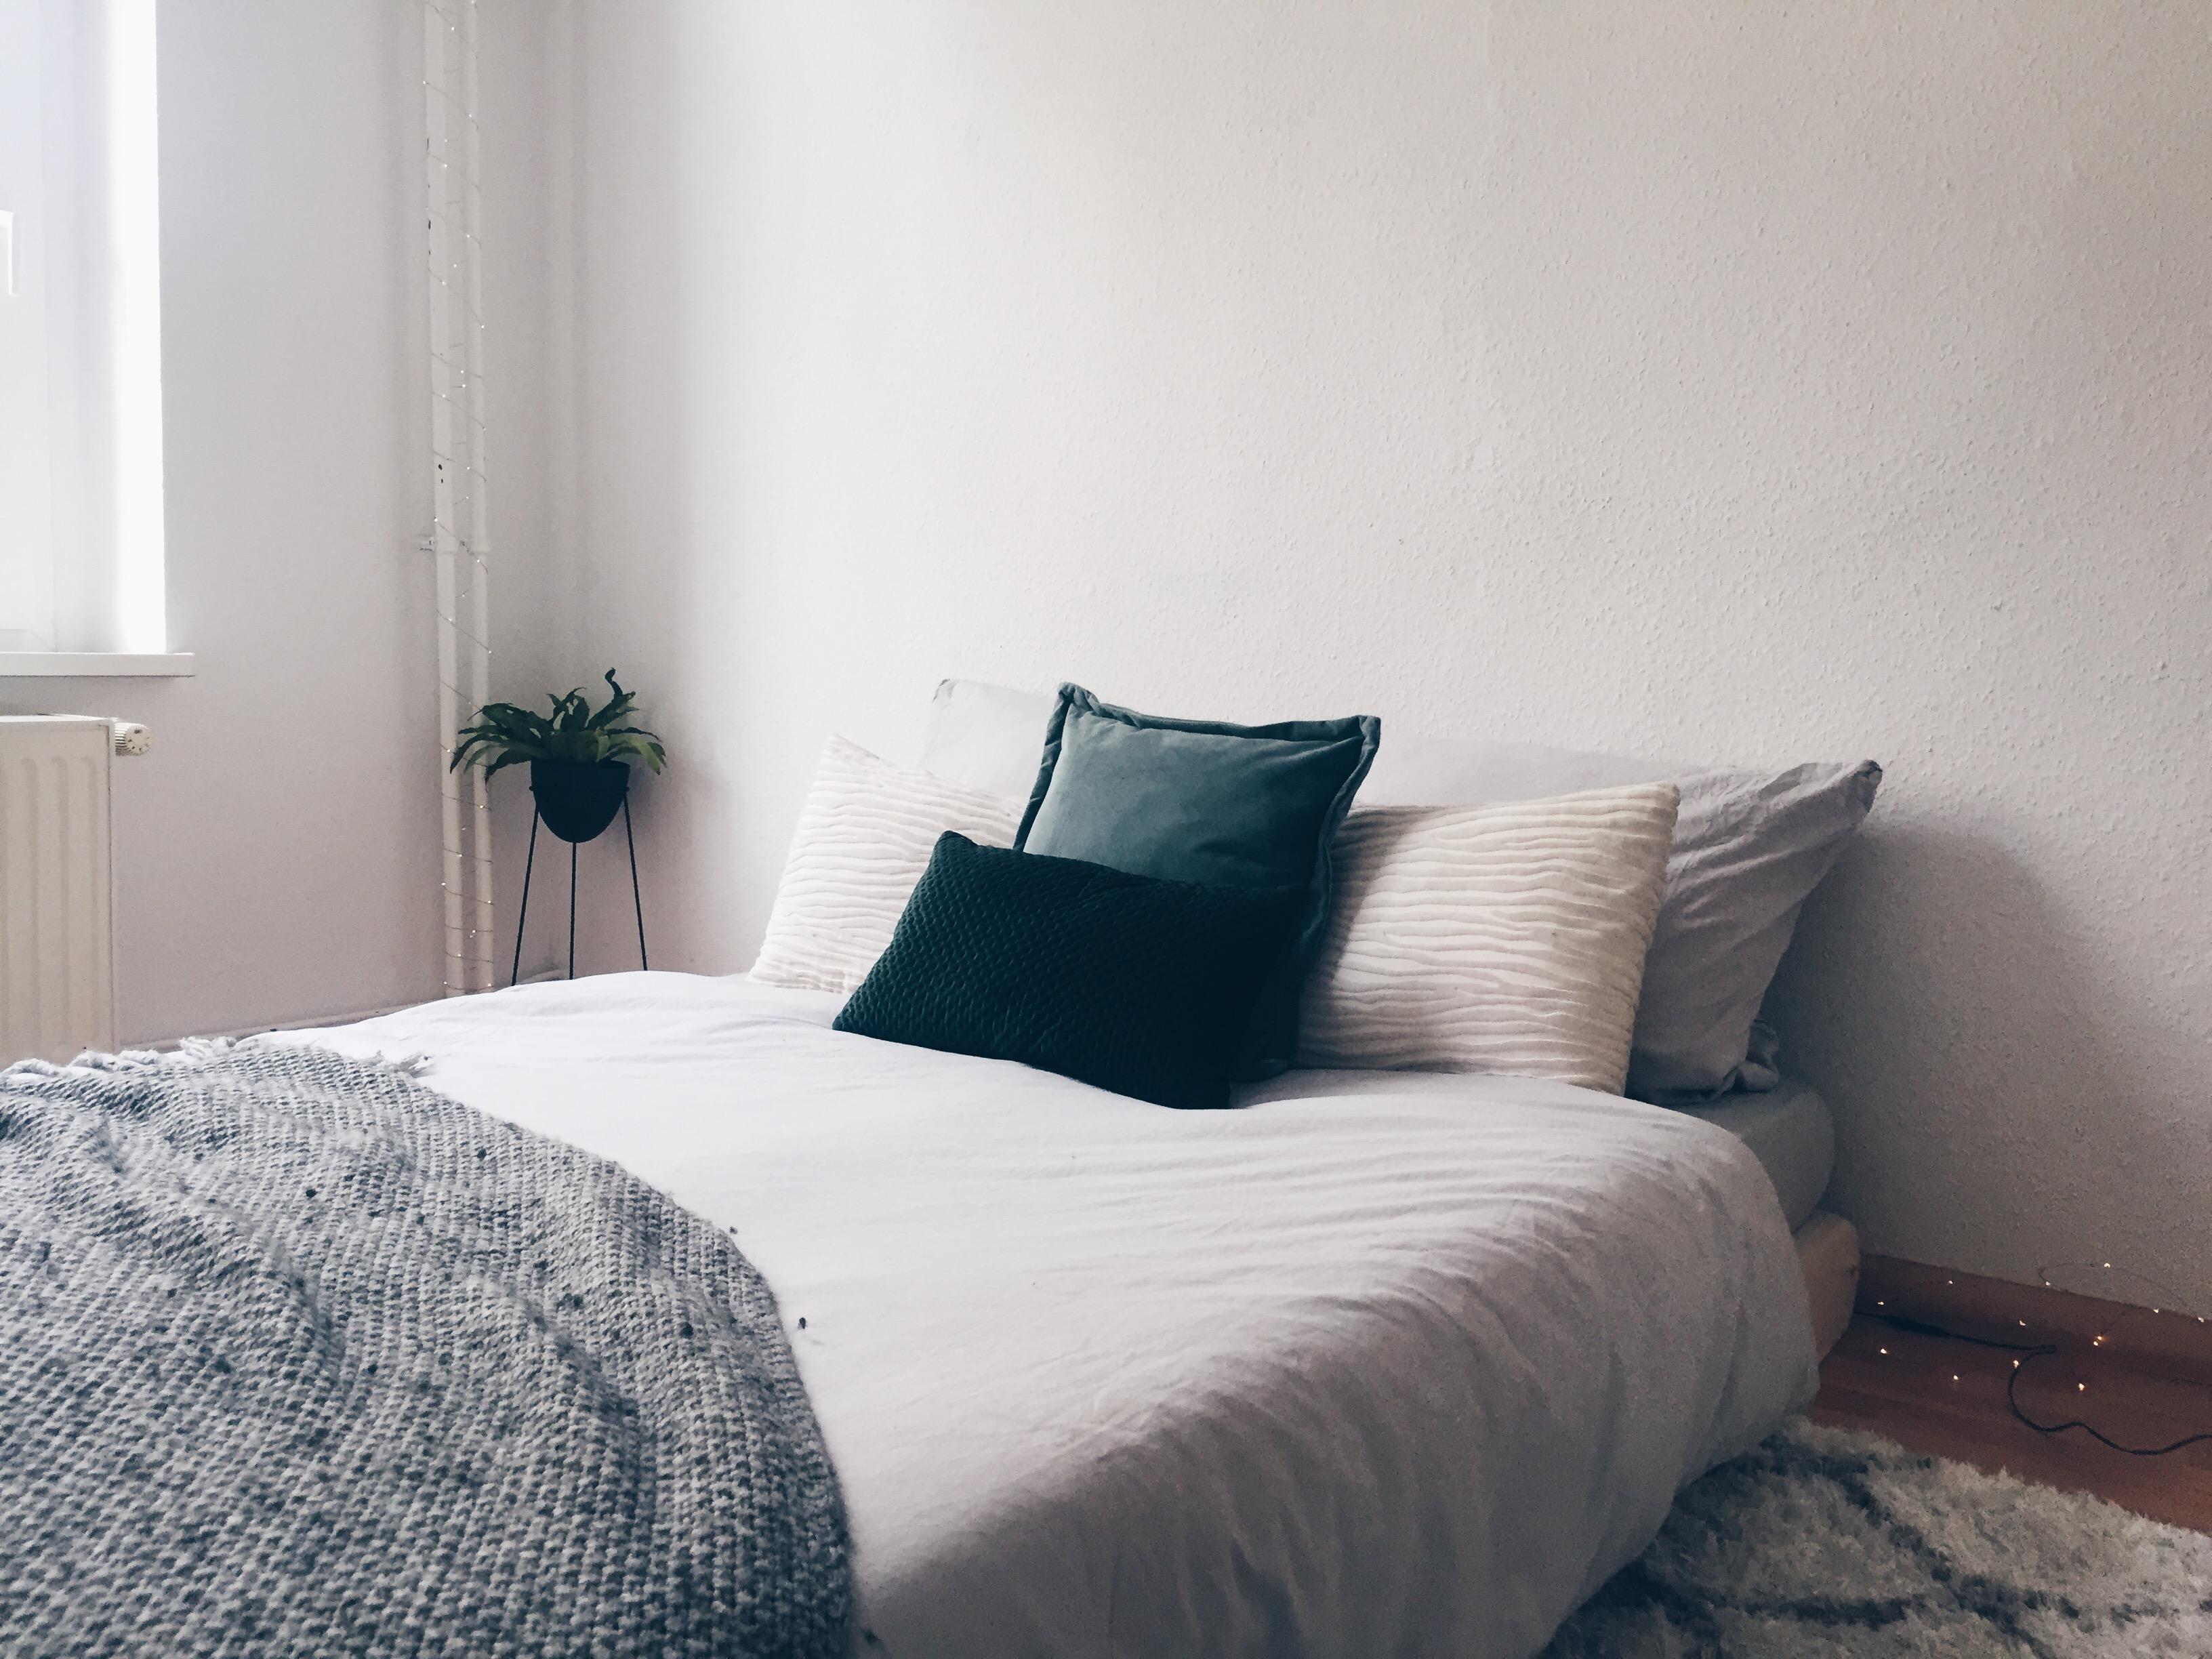 Bei zwei Fellnasen muss man eben, was den Platz betrifft, im Bett Kompromisse machen. 🐆 
#homestory #minimalism #bed